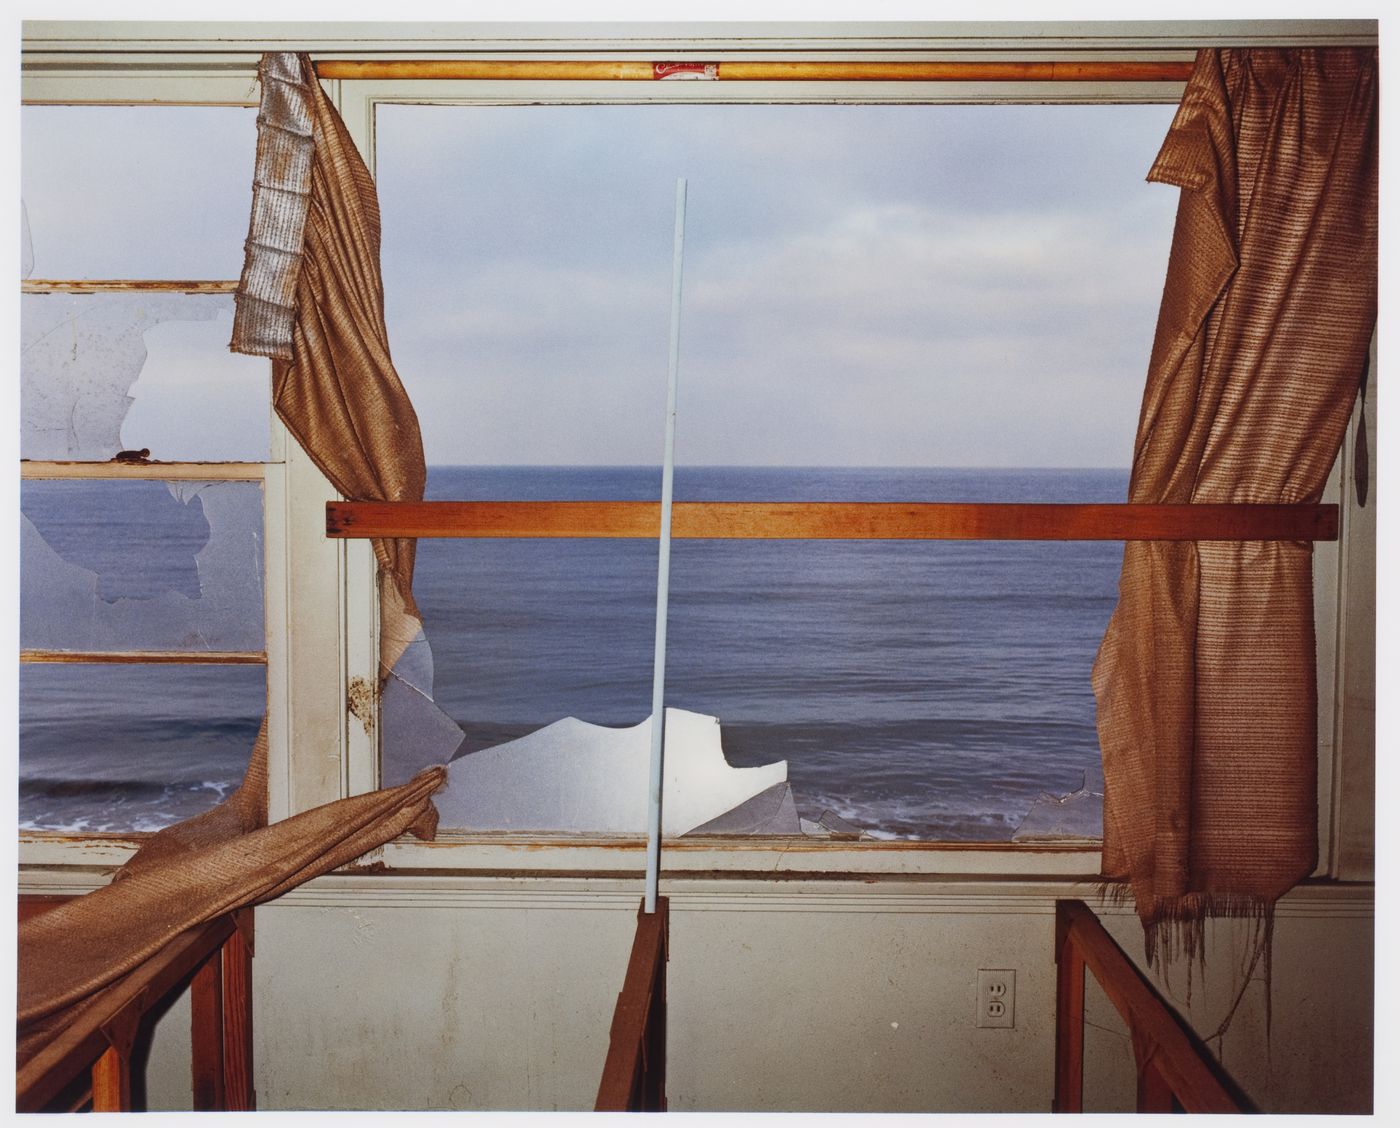 Abandoned beach house, interior, orange curtains framing broken window glass, California ?